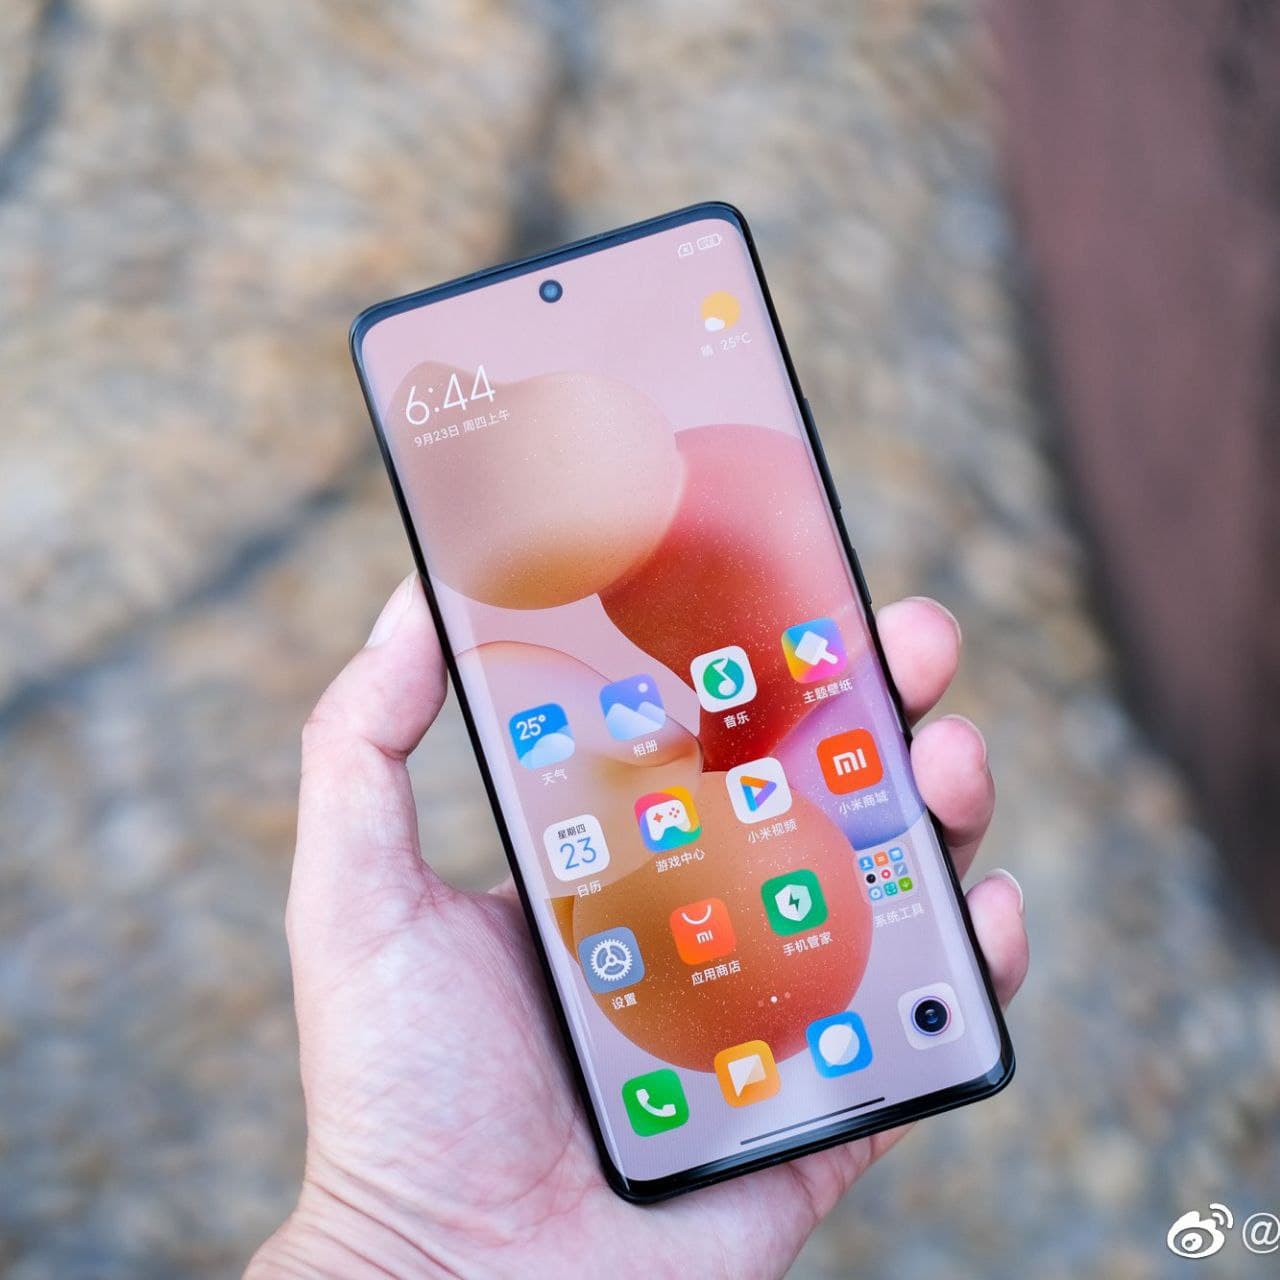 Xiaomi Civi Характеристики И Отзывы